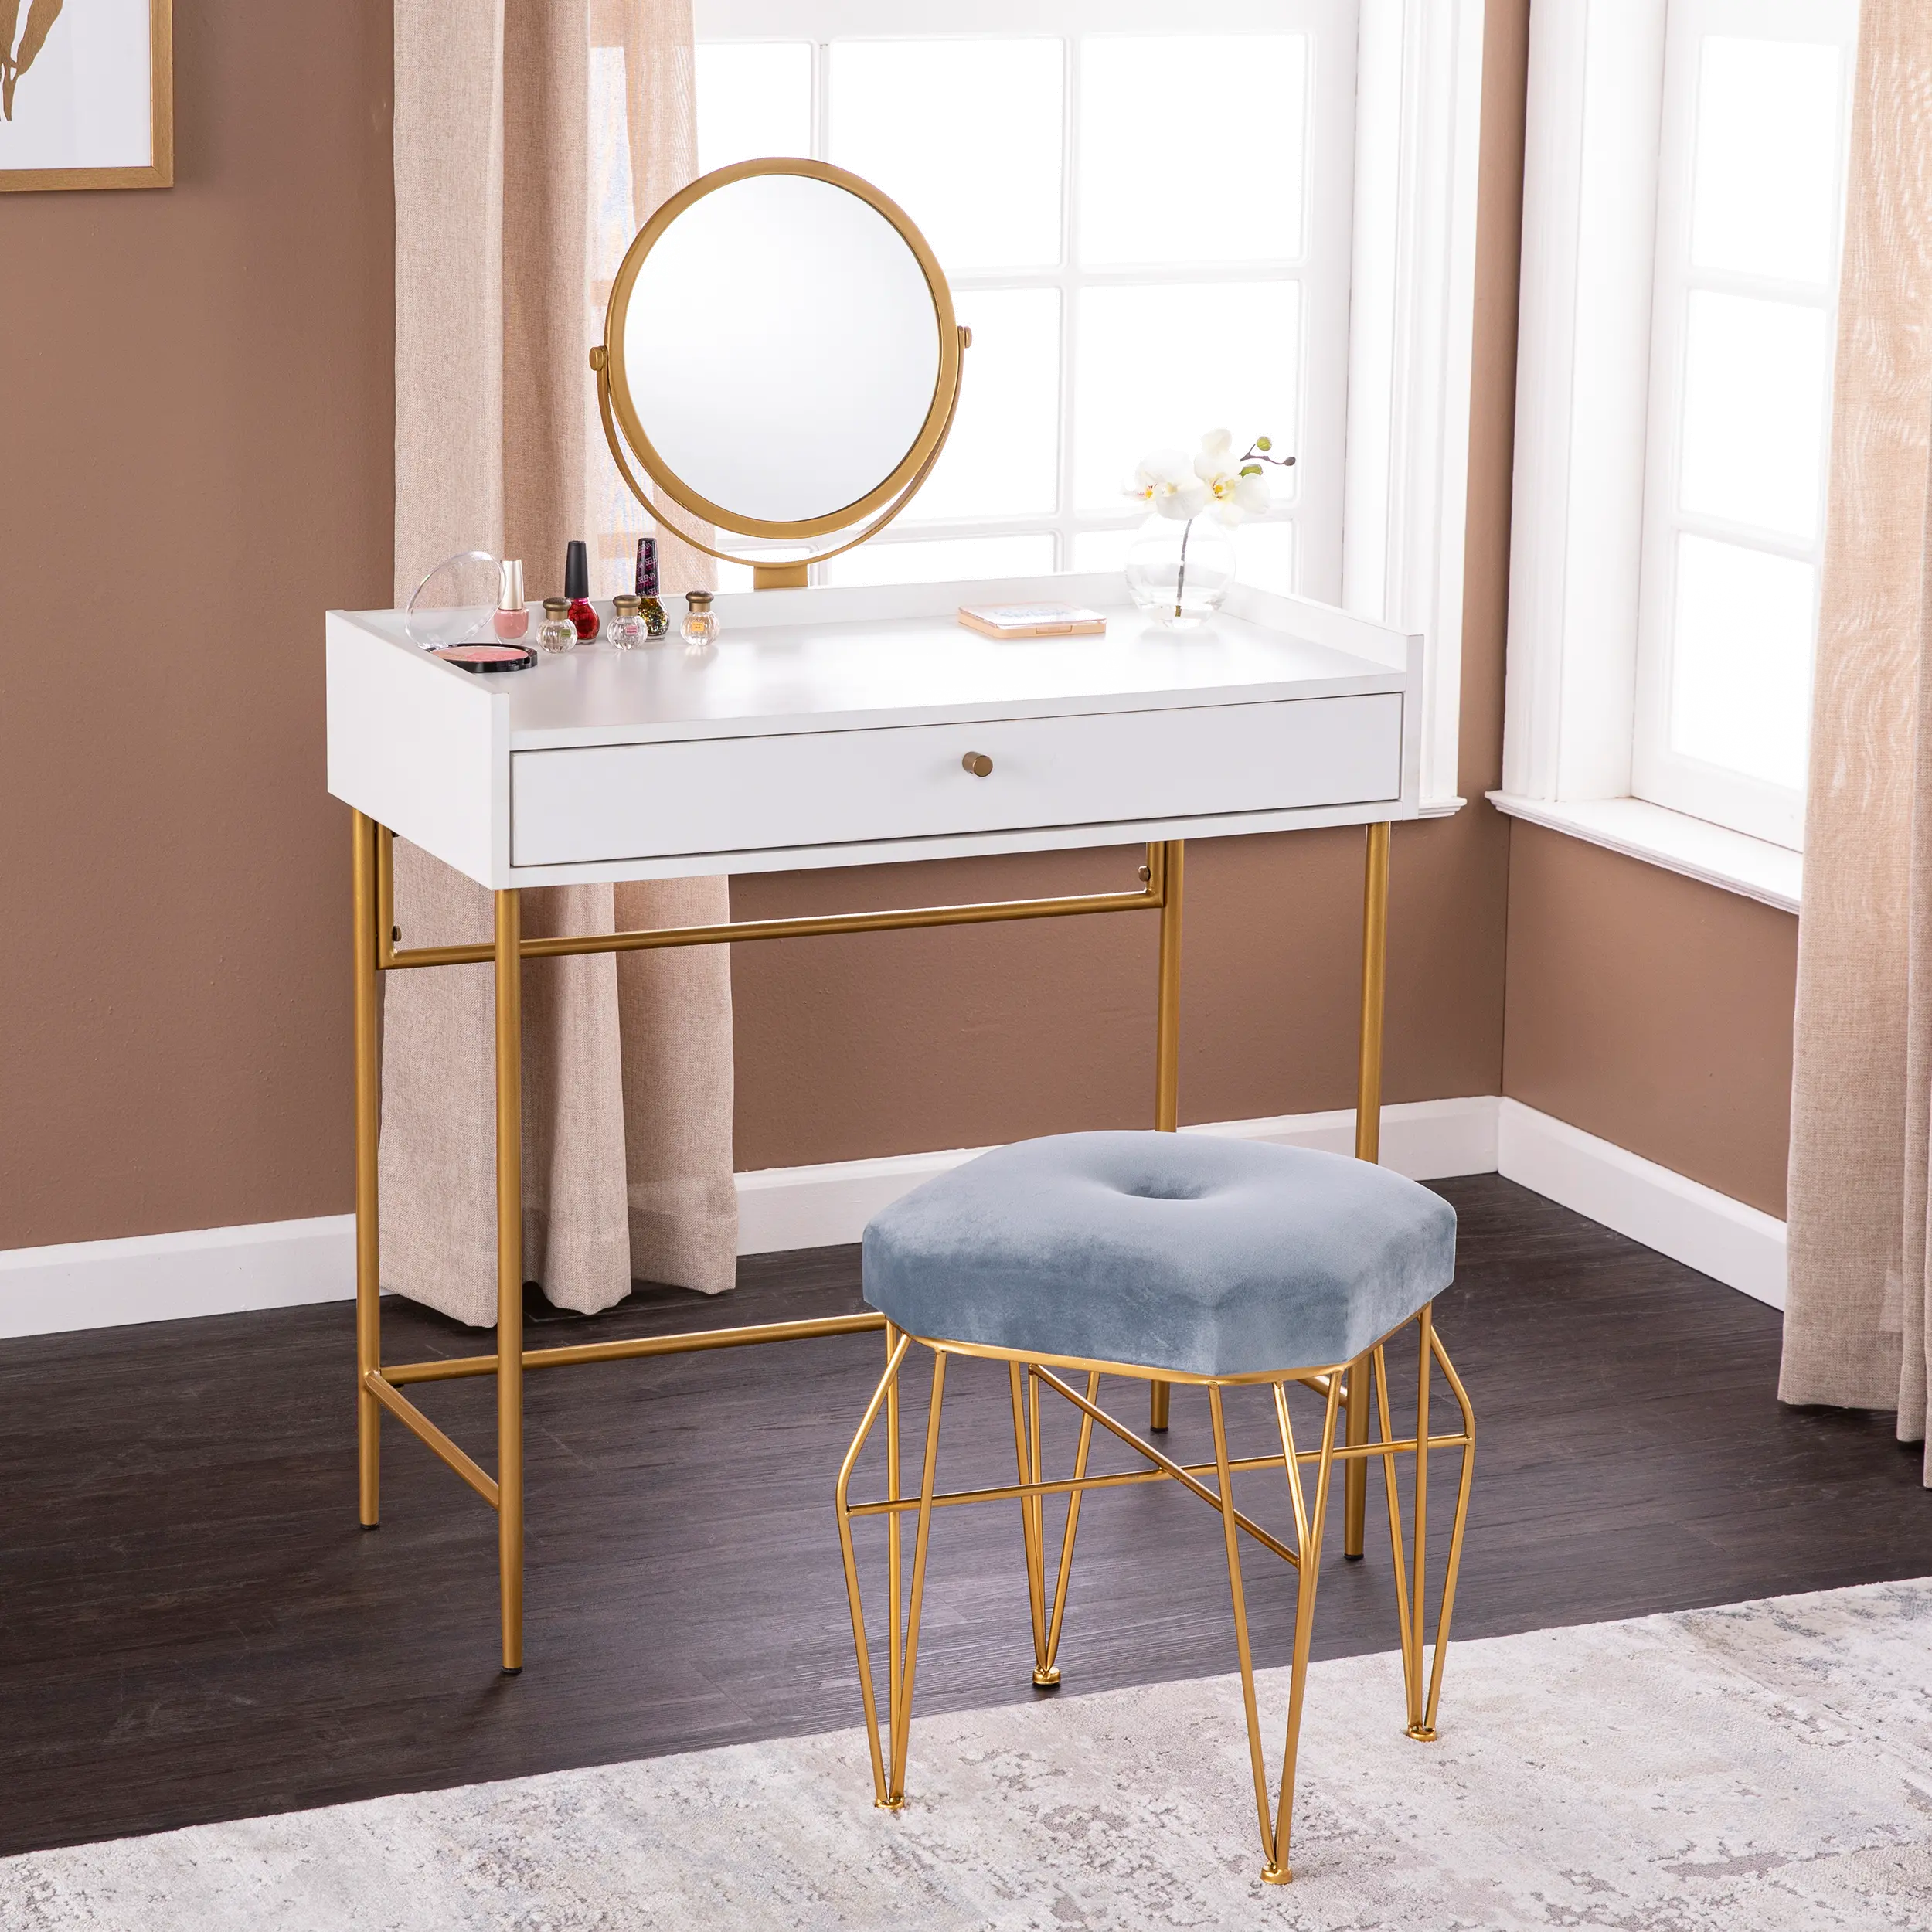 Derald Vanity Table with Mirror